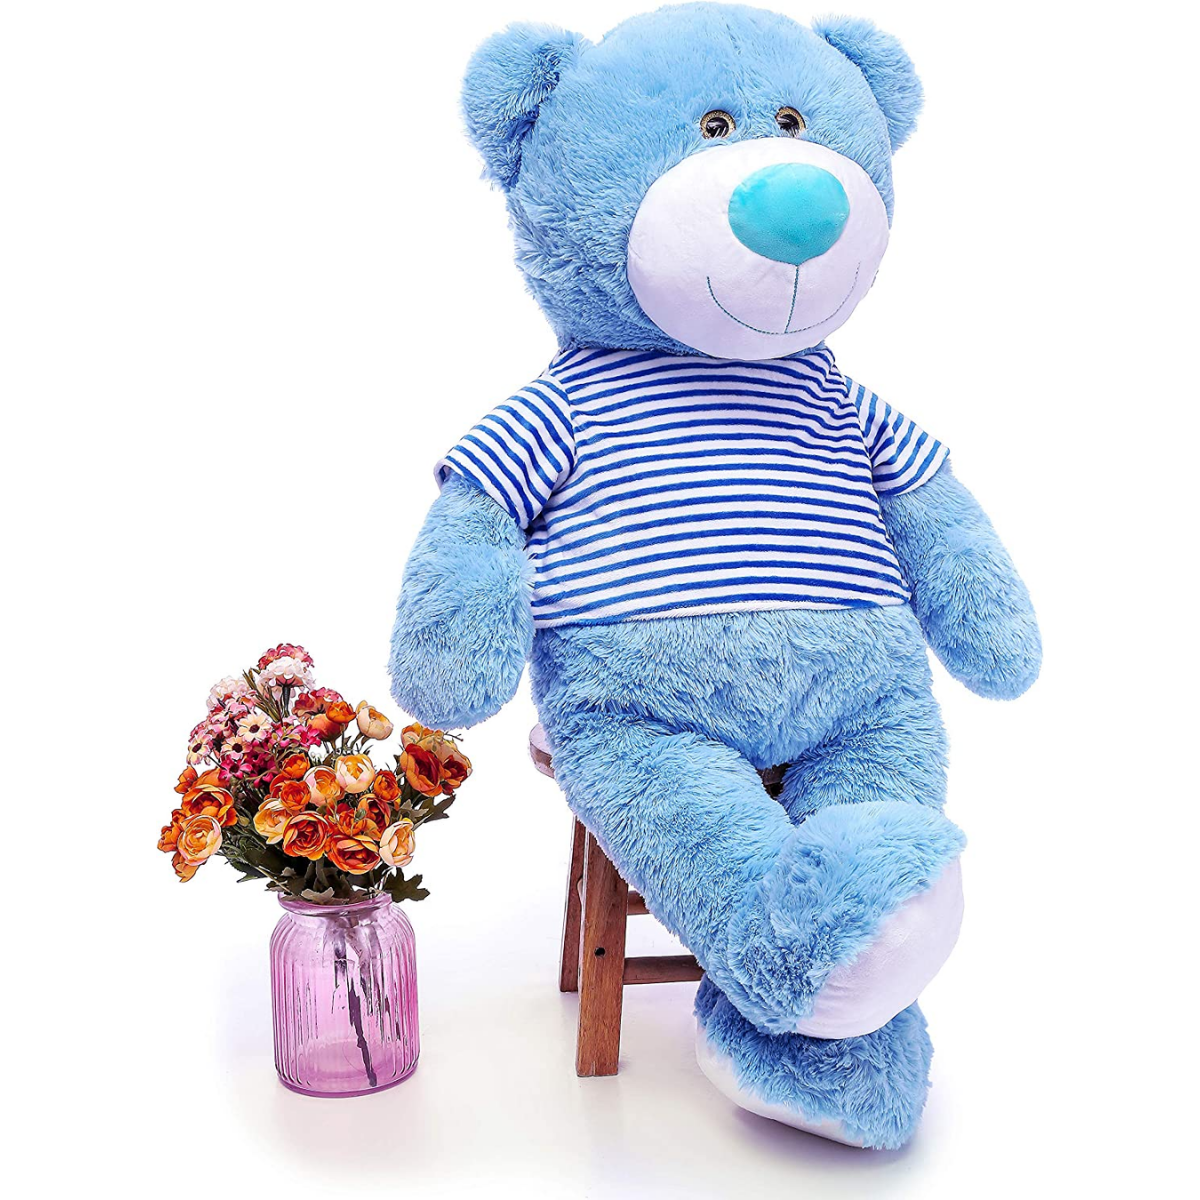 Giant Teddy Bear Plush Toy, Blue/Beige, 36 Inches